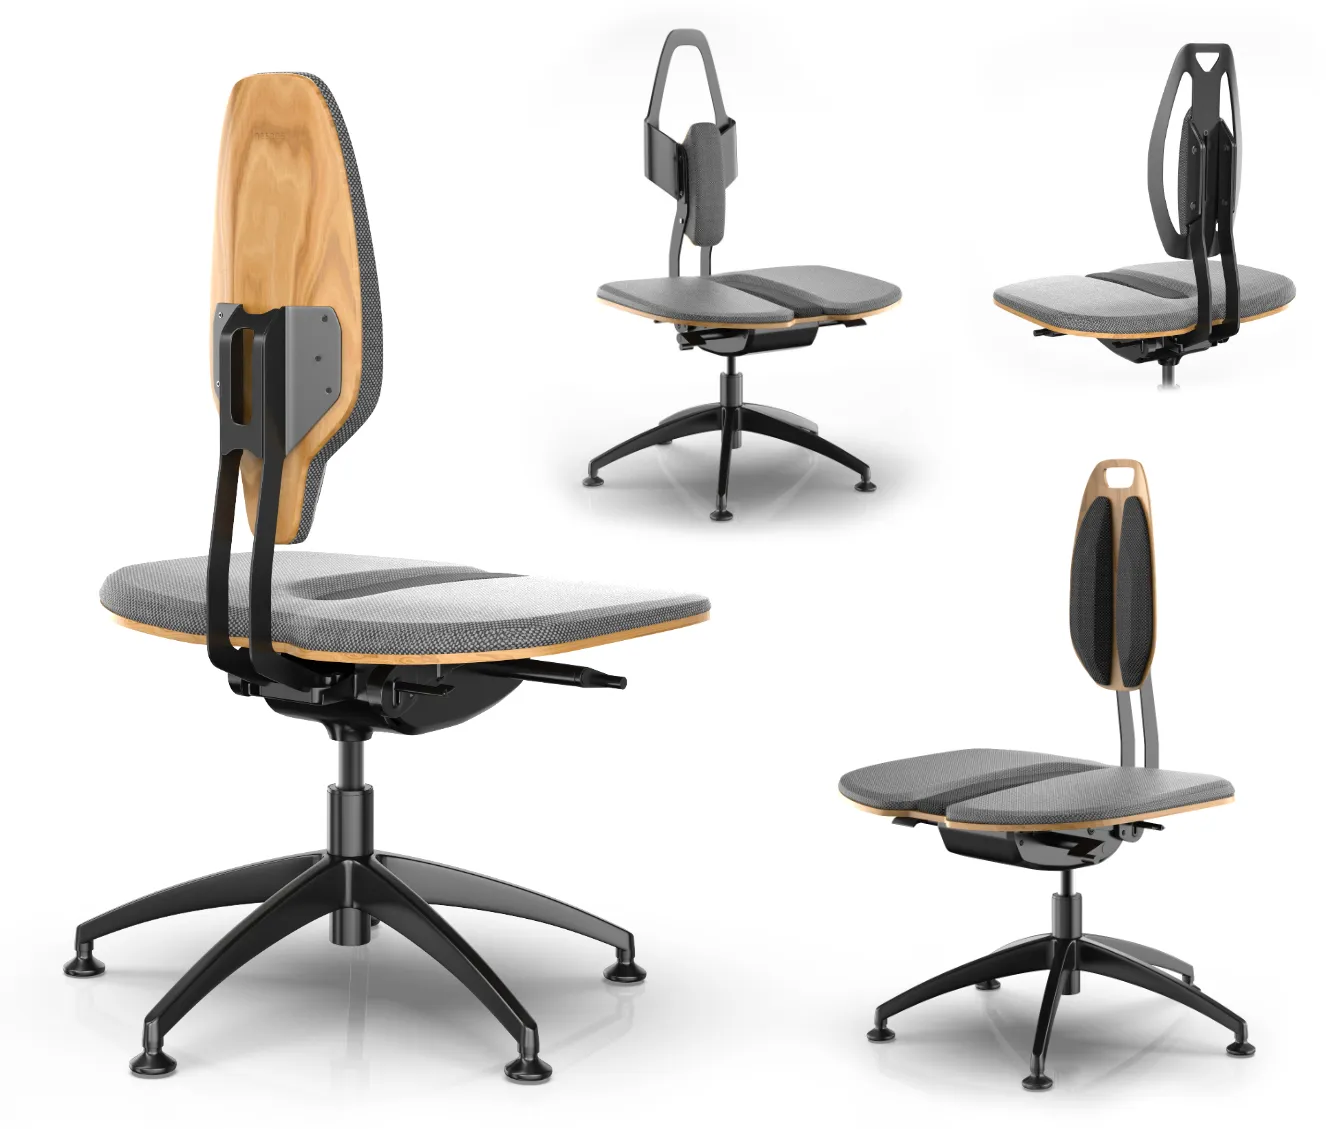 NESEDA Advanced Chair Development visualizations_Design by Werkemotion